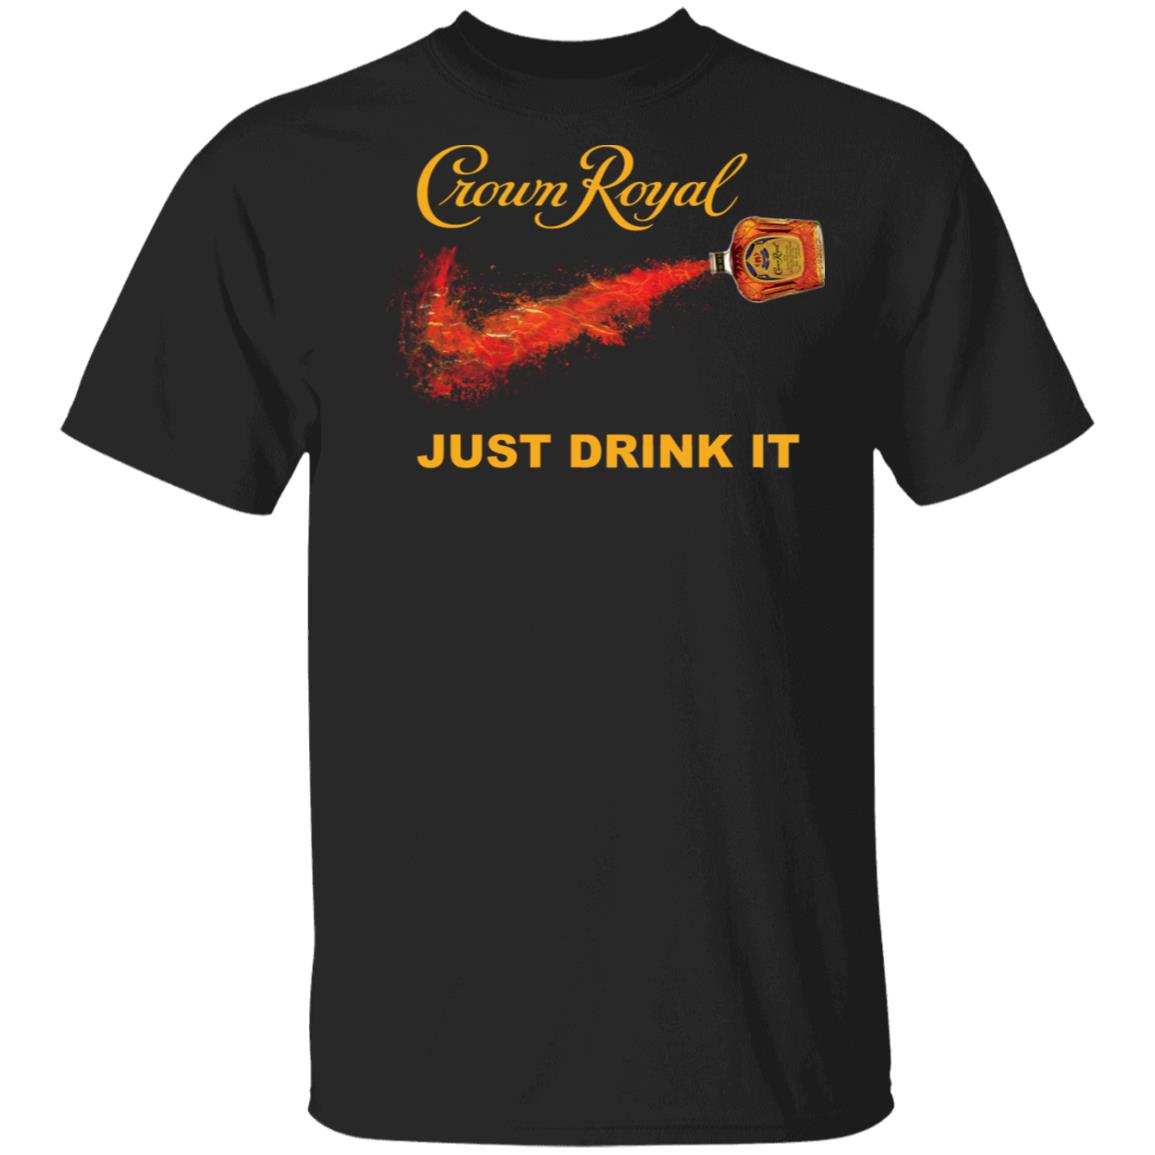 Crown Royal just drink it shirt - Rockatee